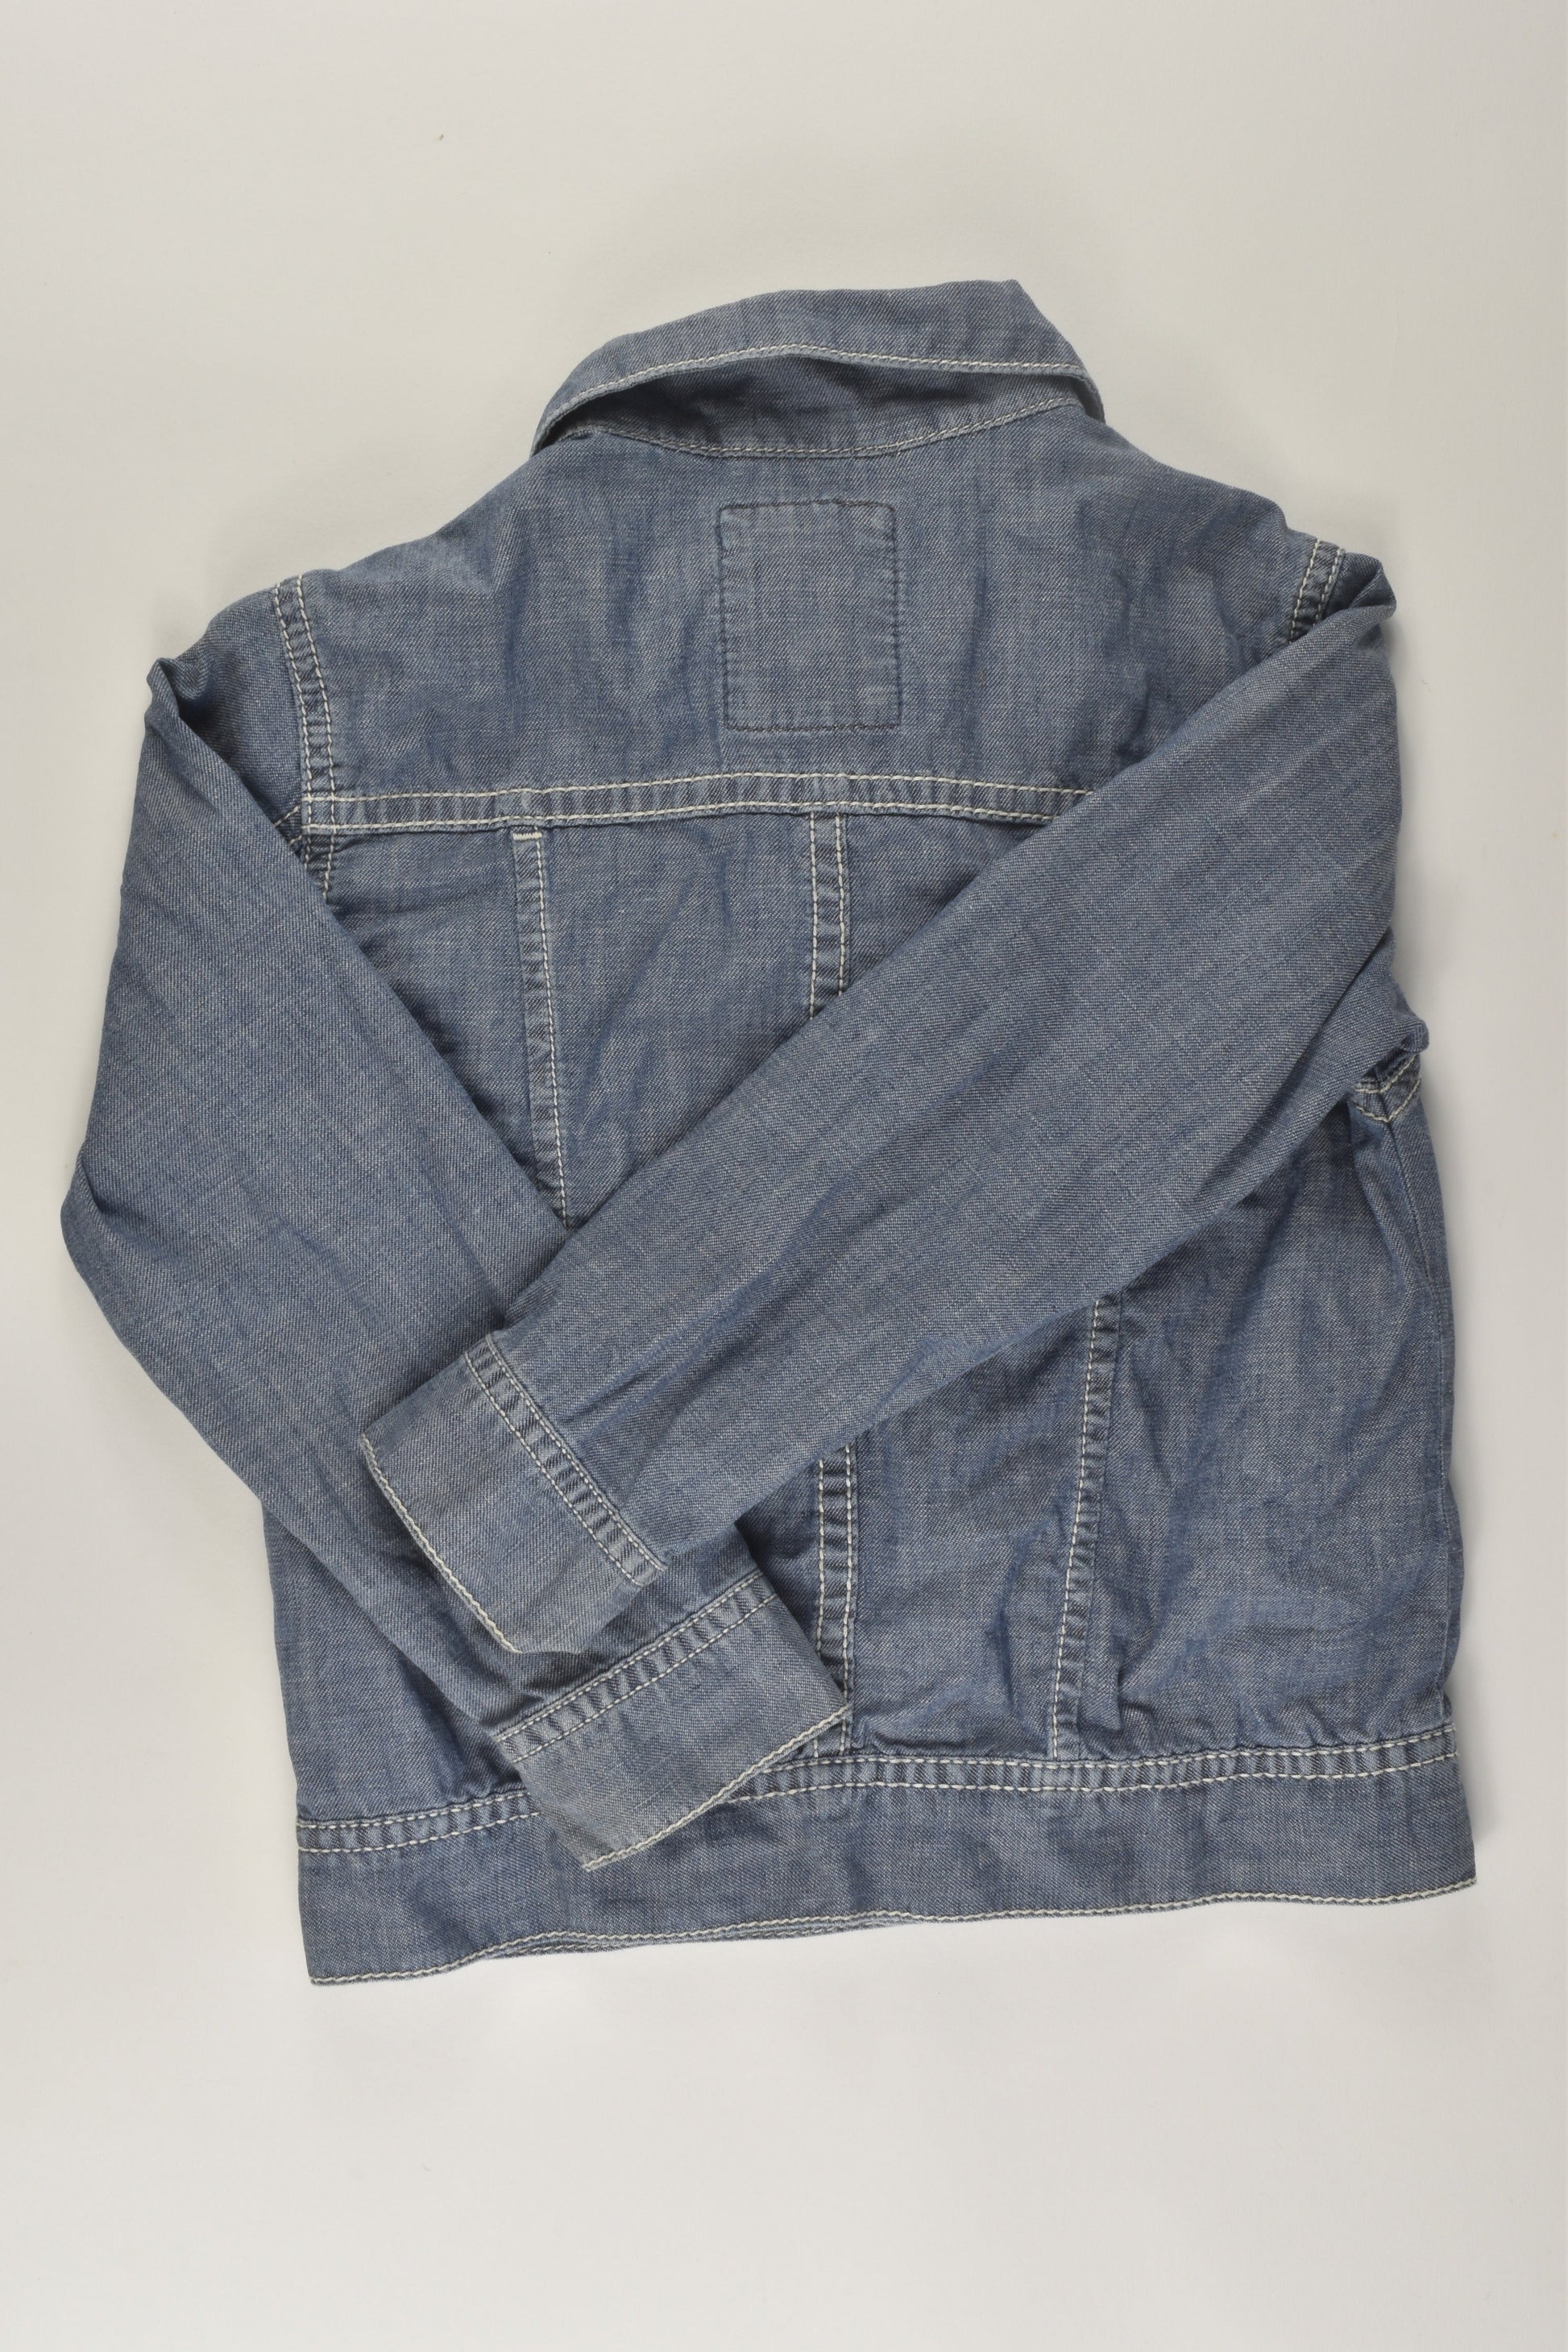 Okaïdi Size 3-4 (102 cm) Lightweight Denim Jacket